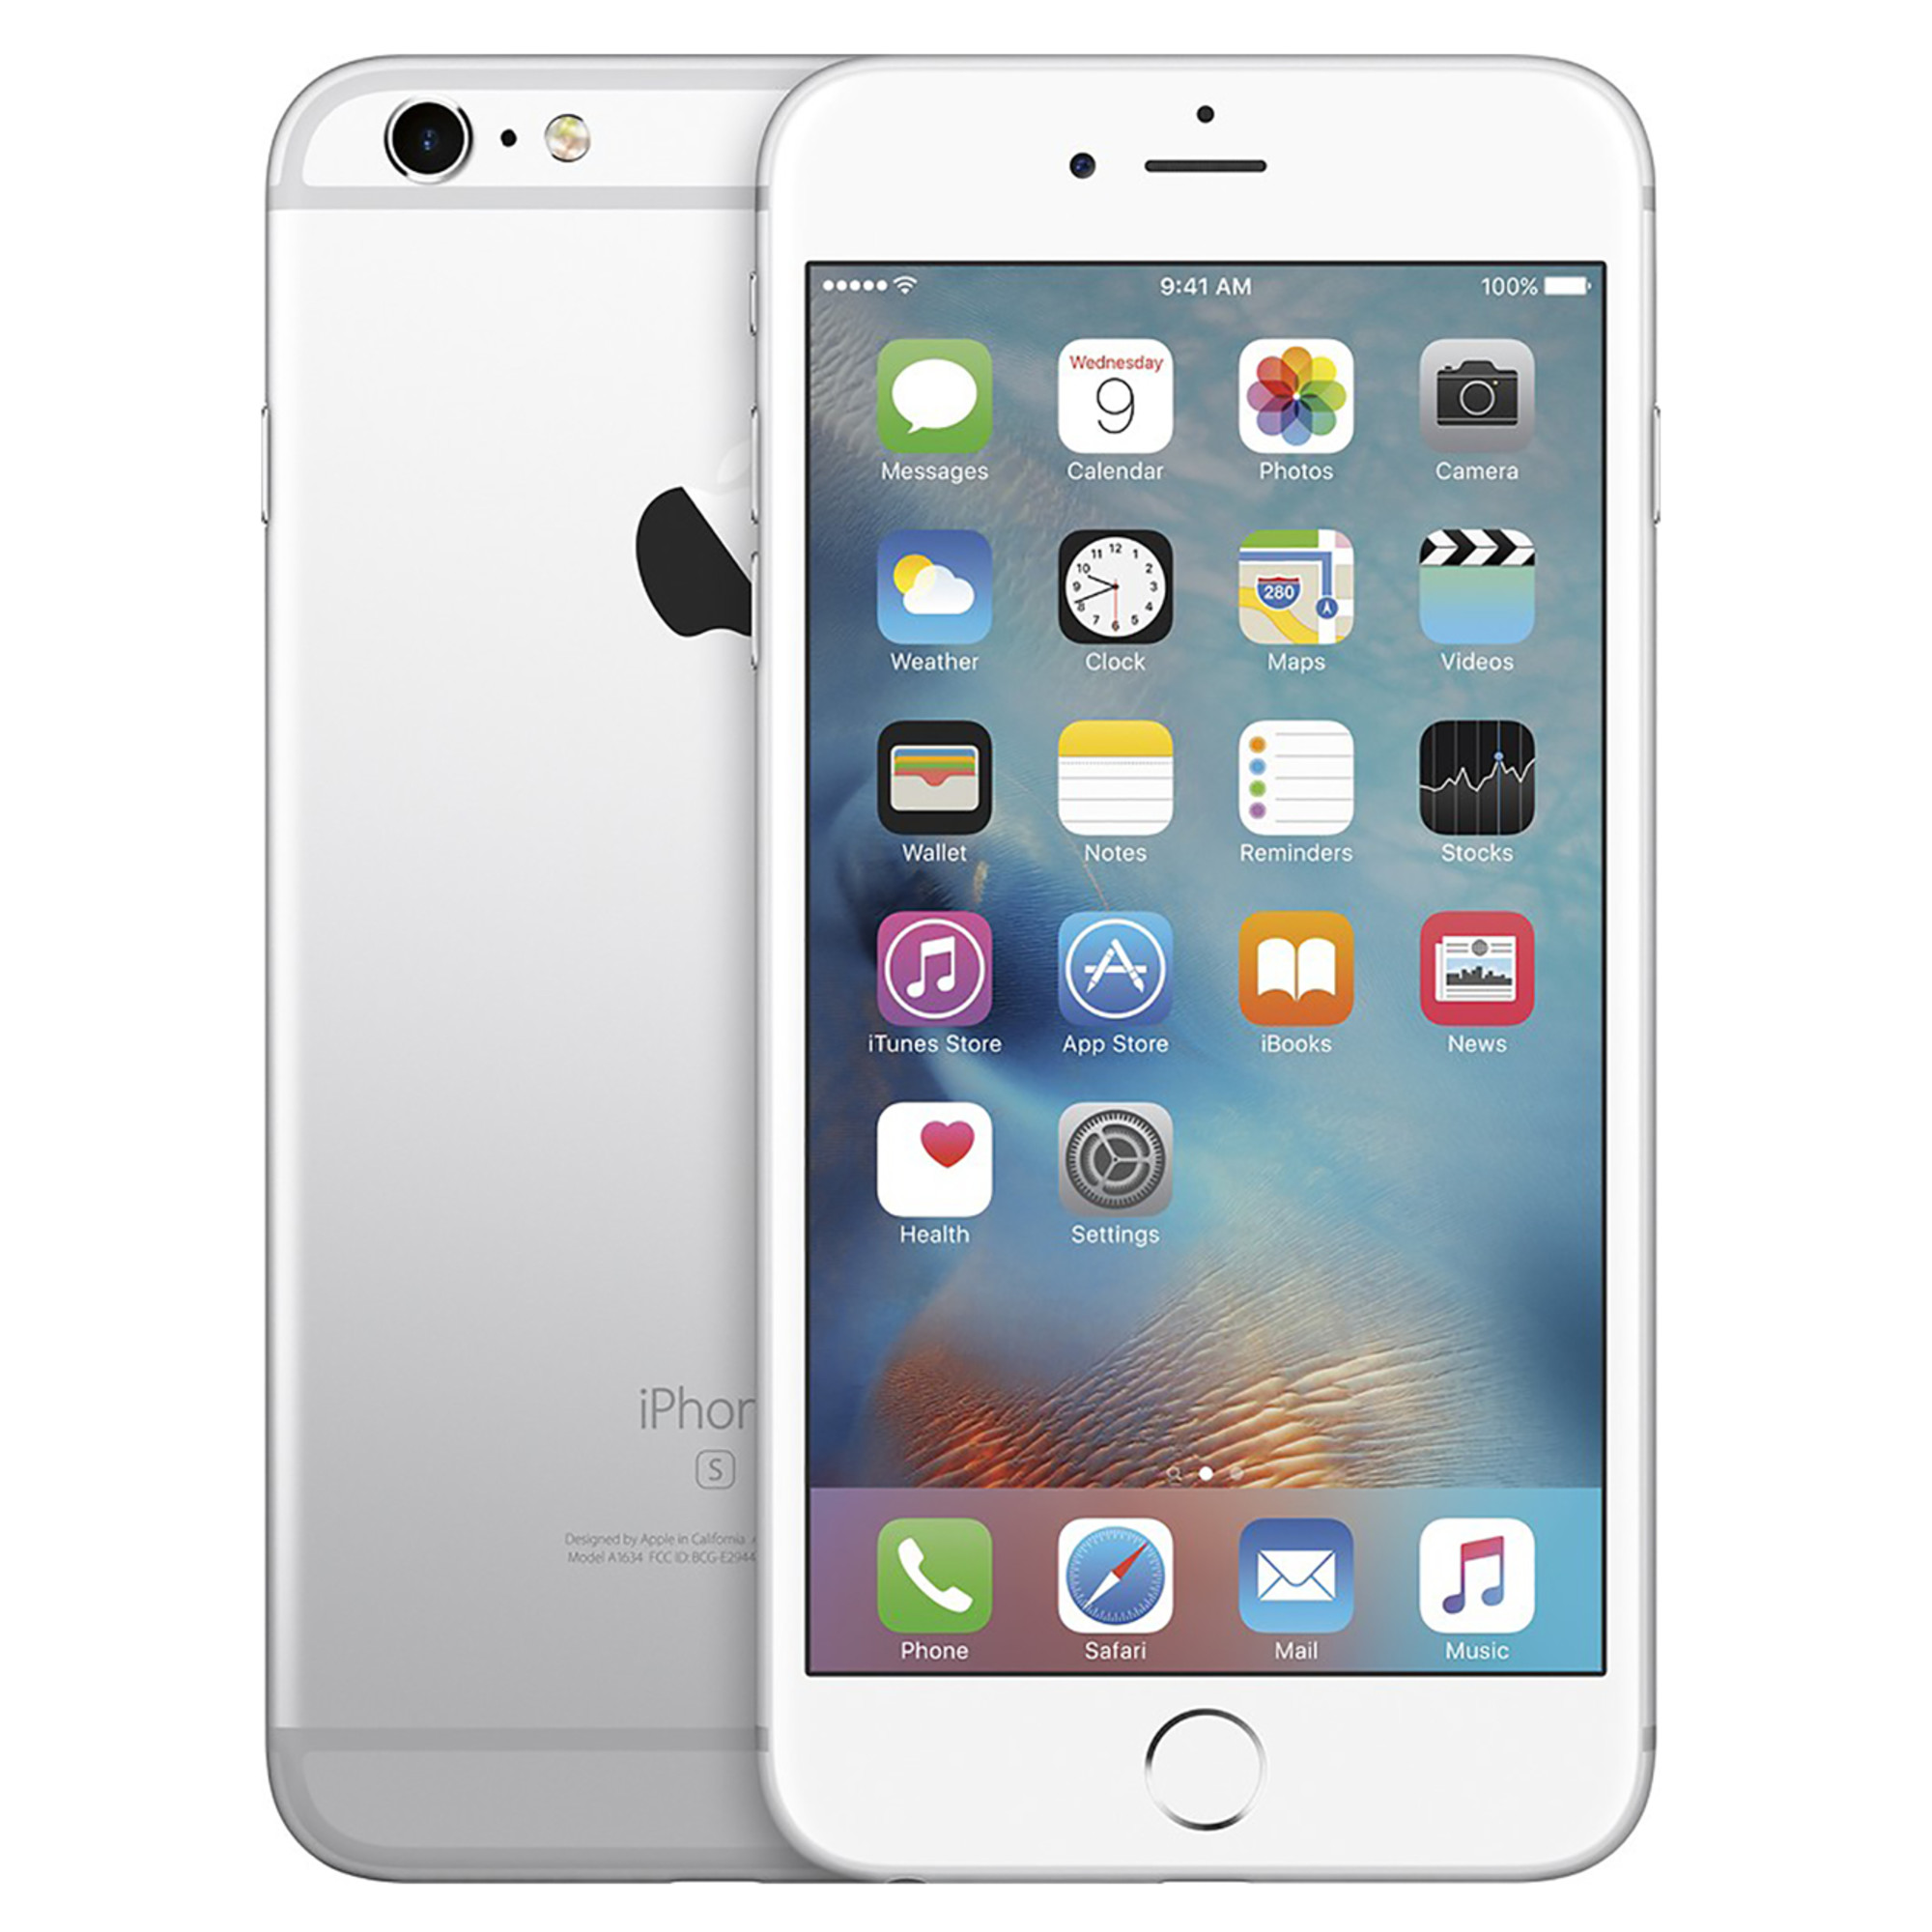 Apple iPhone 6s Plus 16GB Unlocked GSM 4G LTE 12MP Phone (Certified Refurbished) | eBay